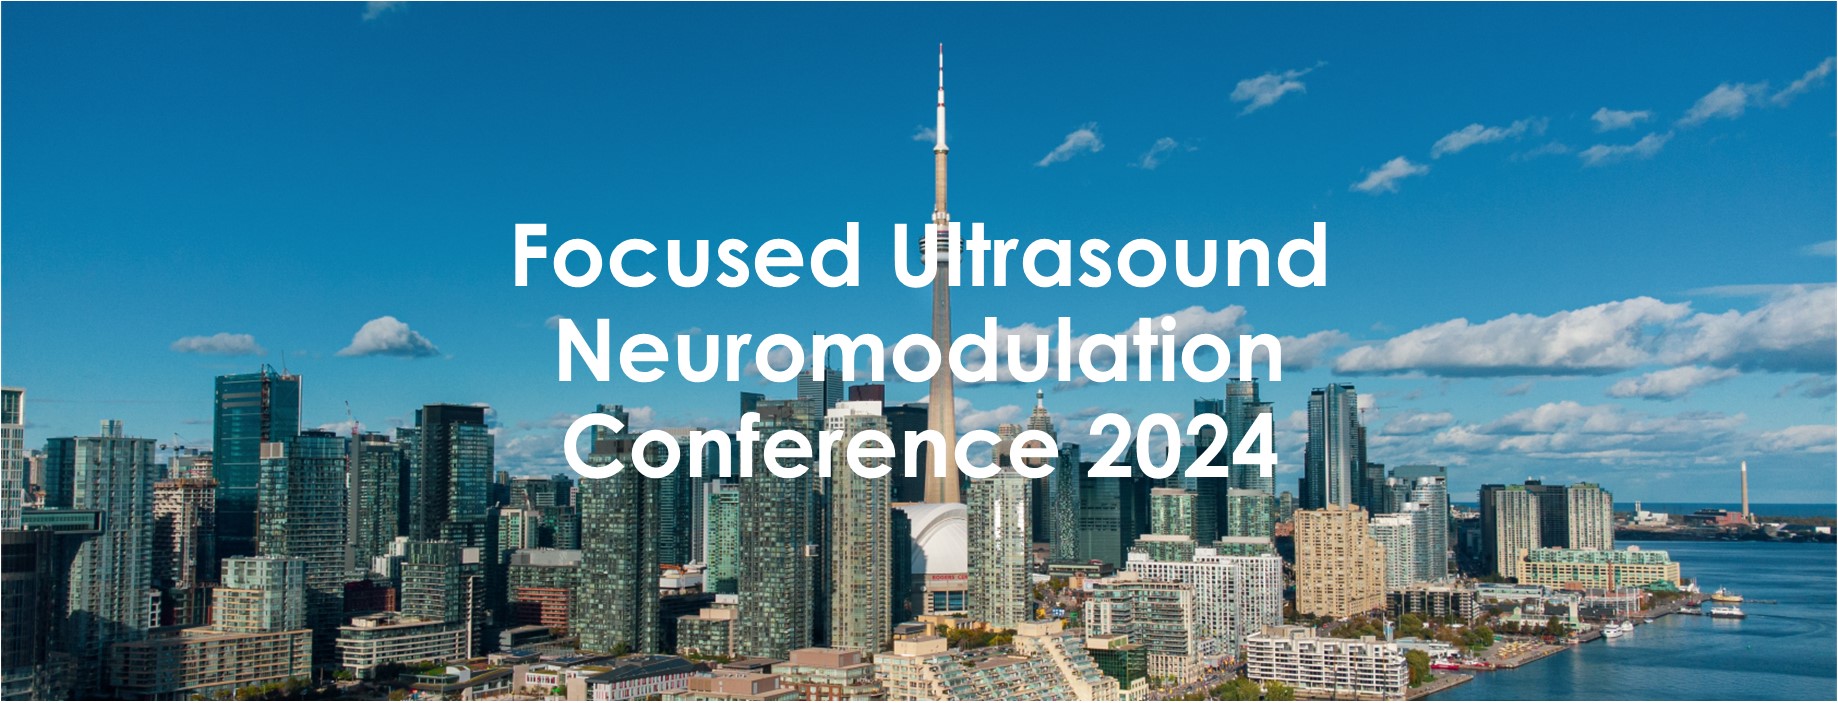 FUN 2024 - Focused Ultrasound Neuromodulation Conference 2024